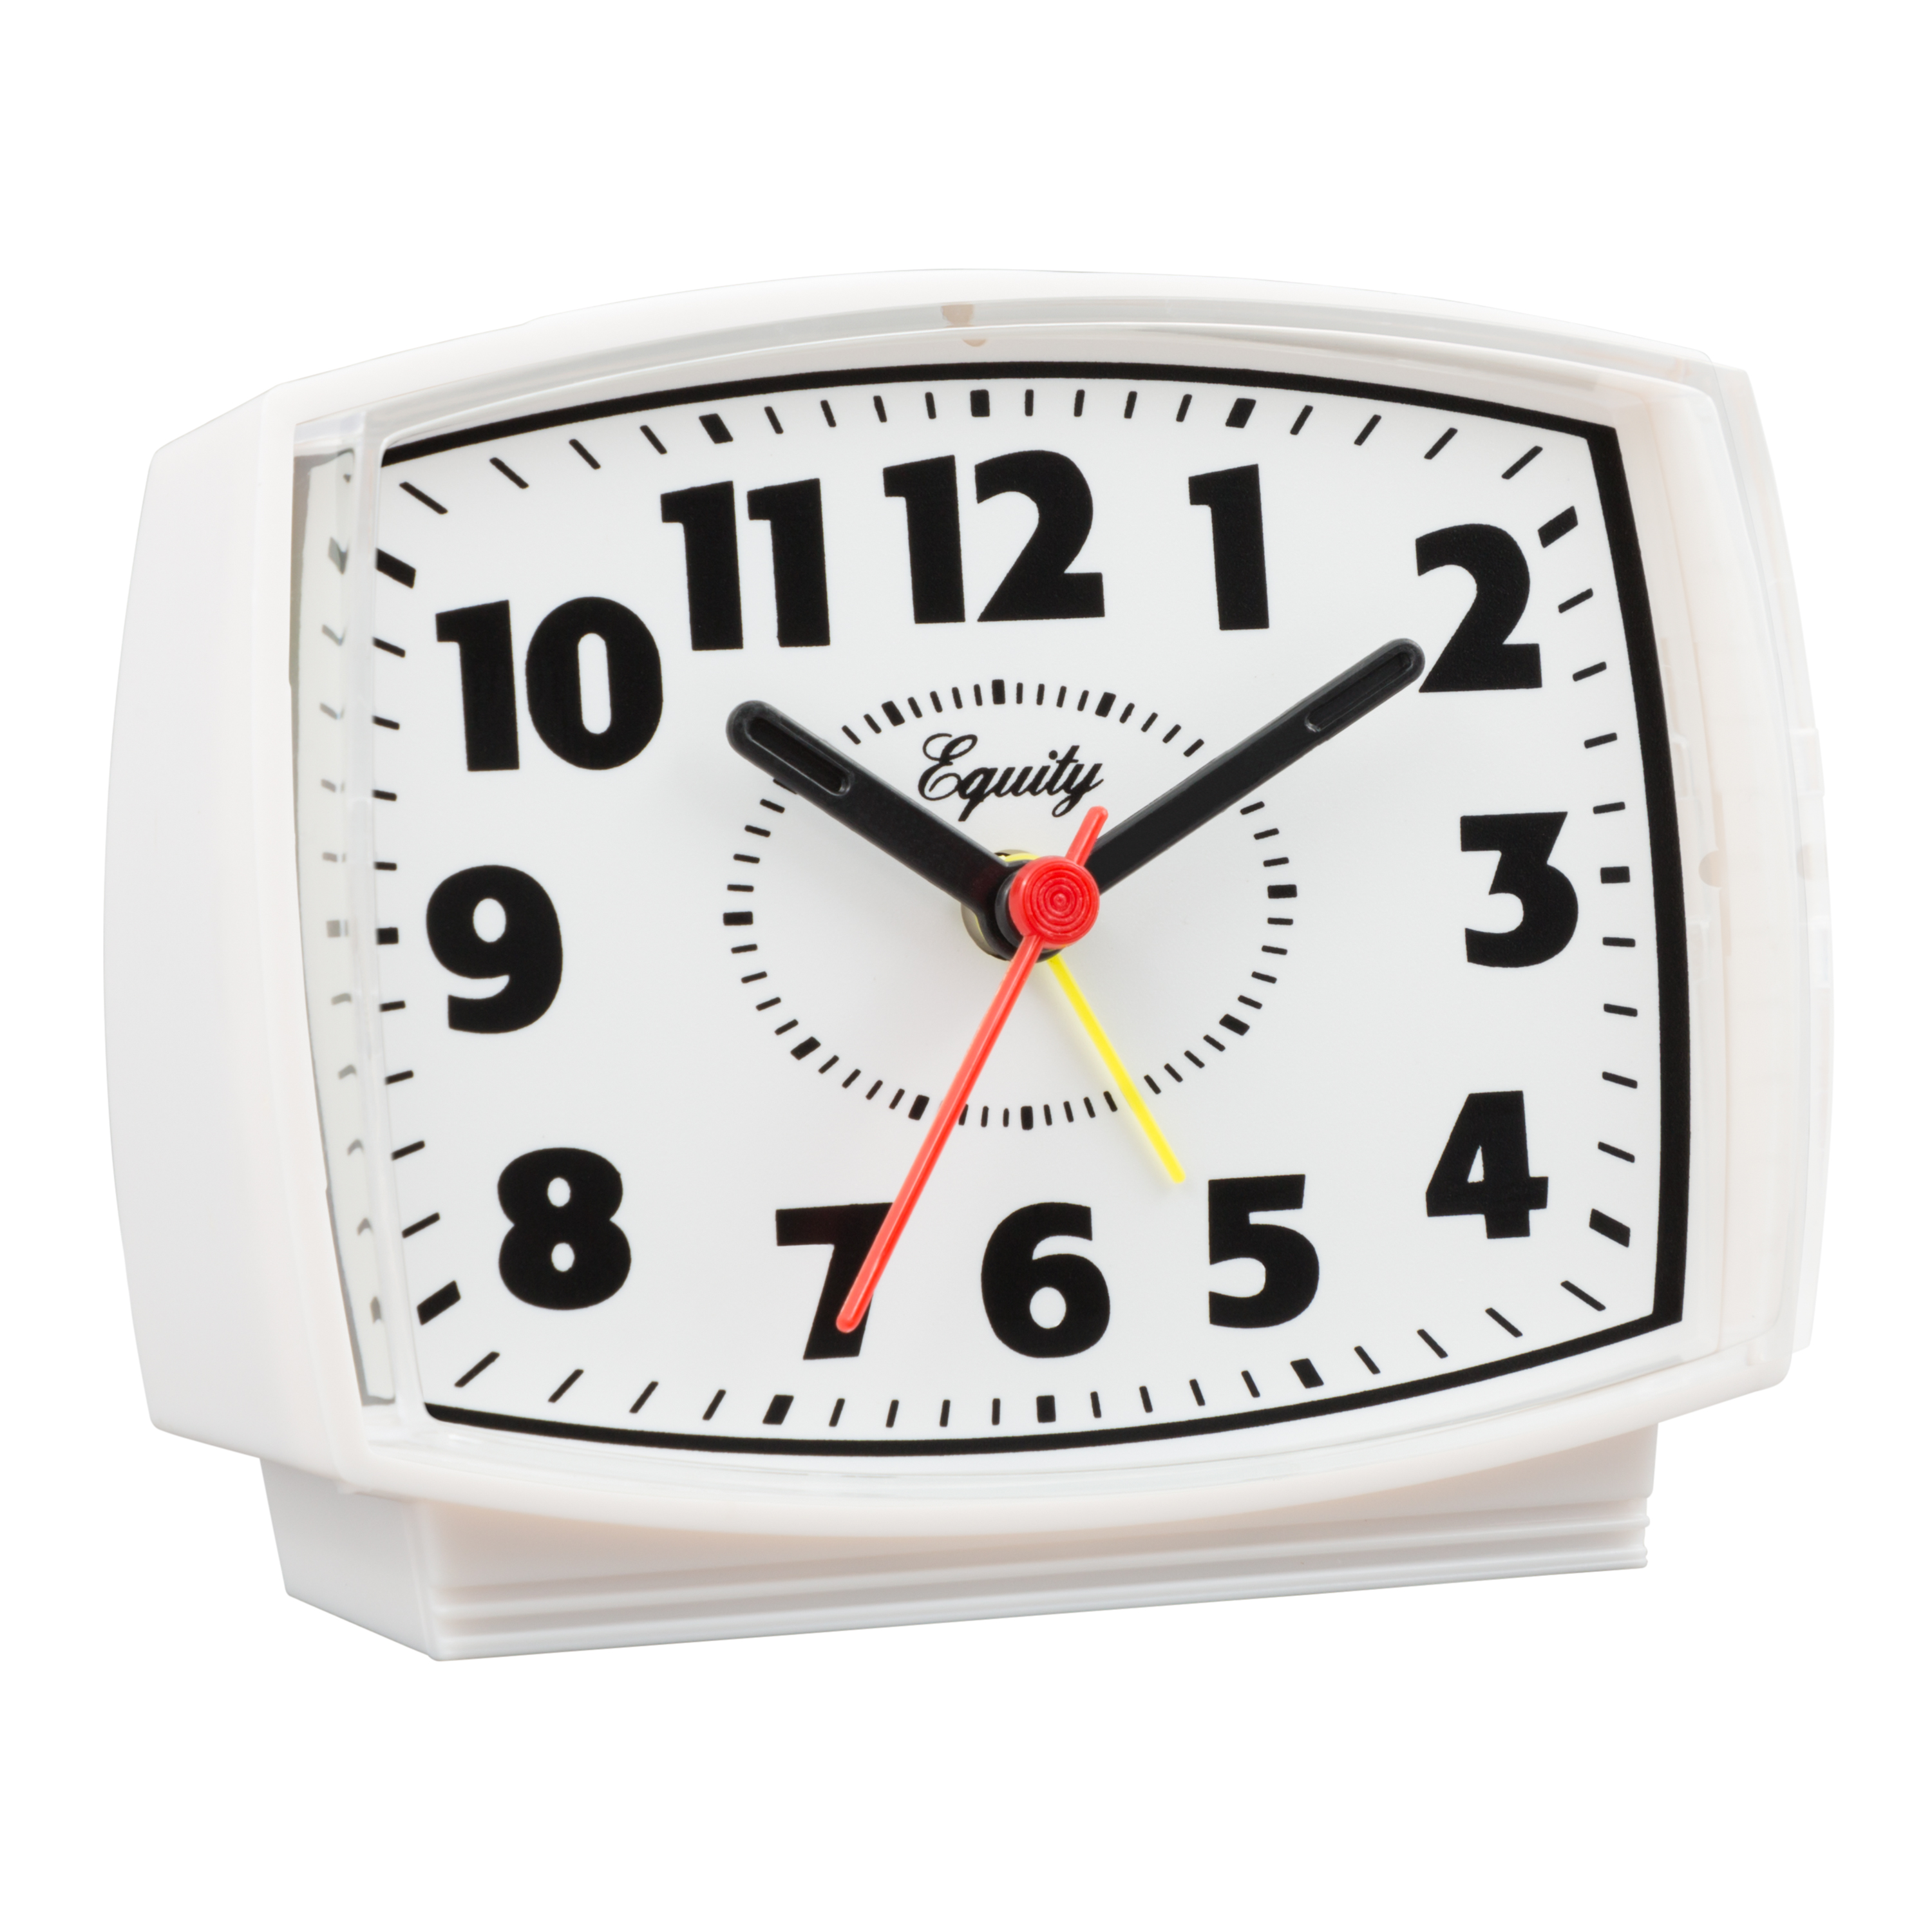 Equity by La Crosse 33100 Electric Analog Alarm Clock - image 5 of 7